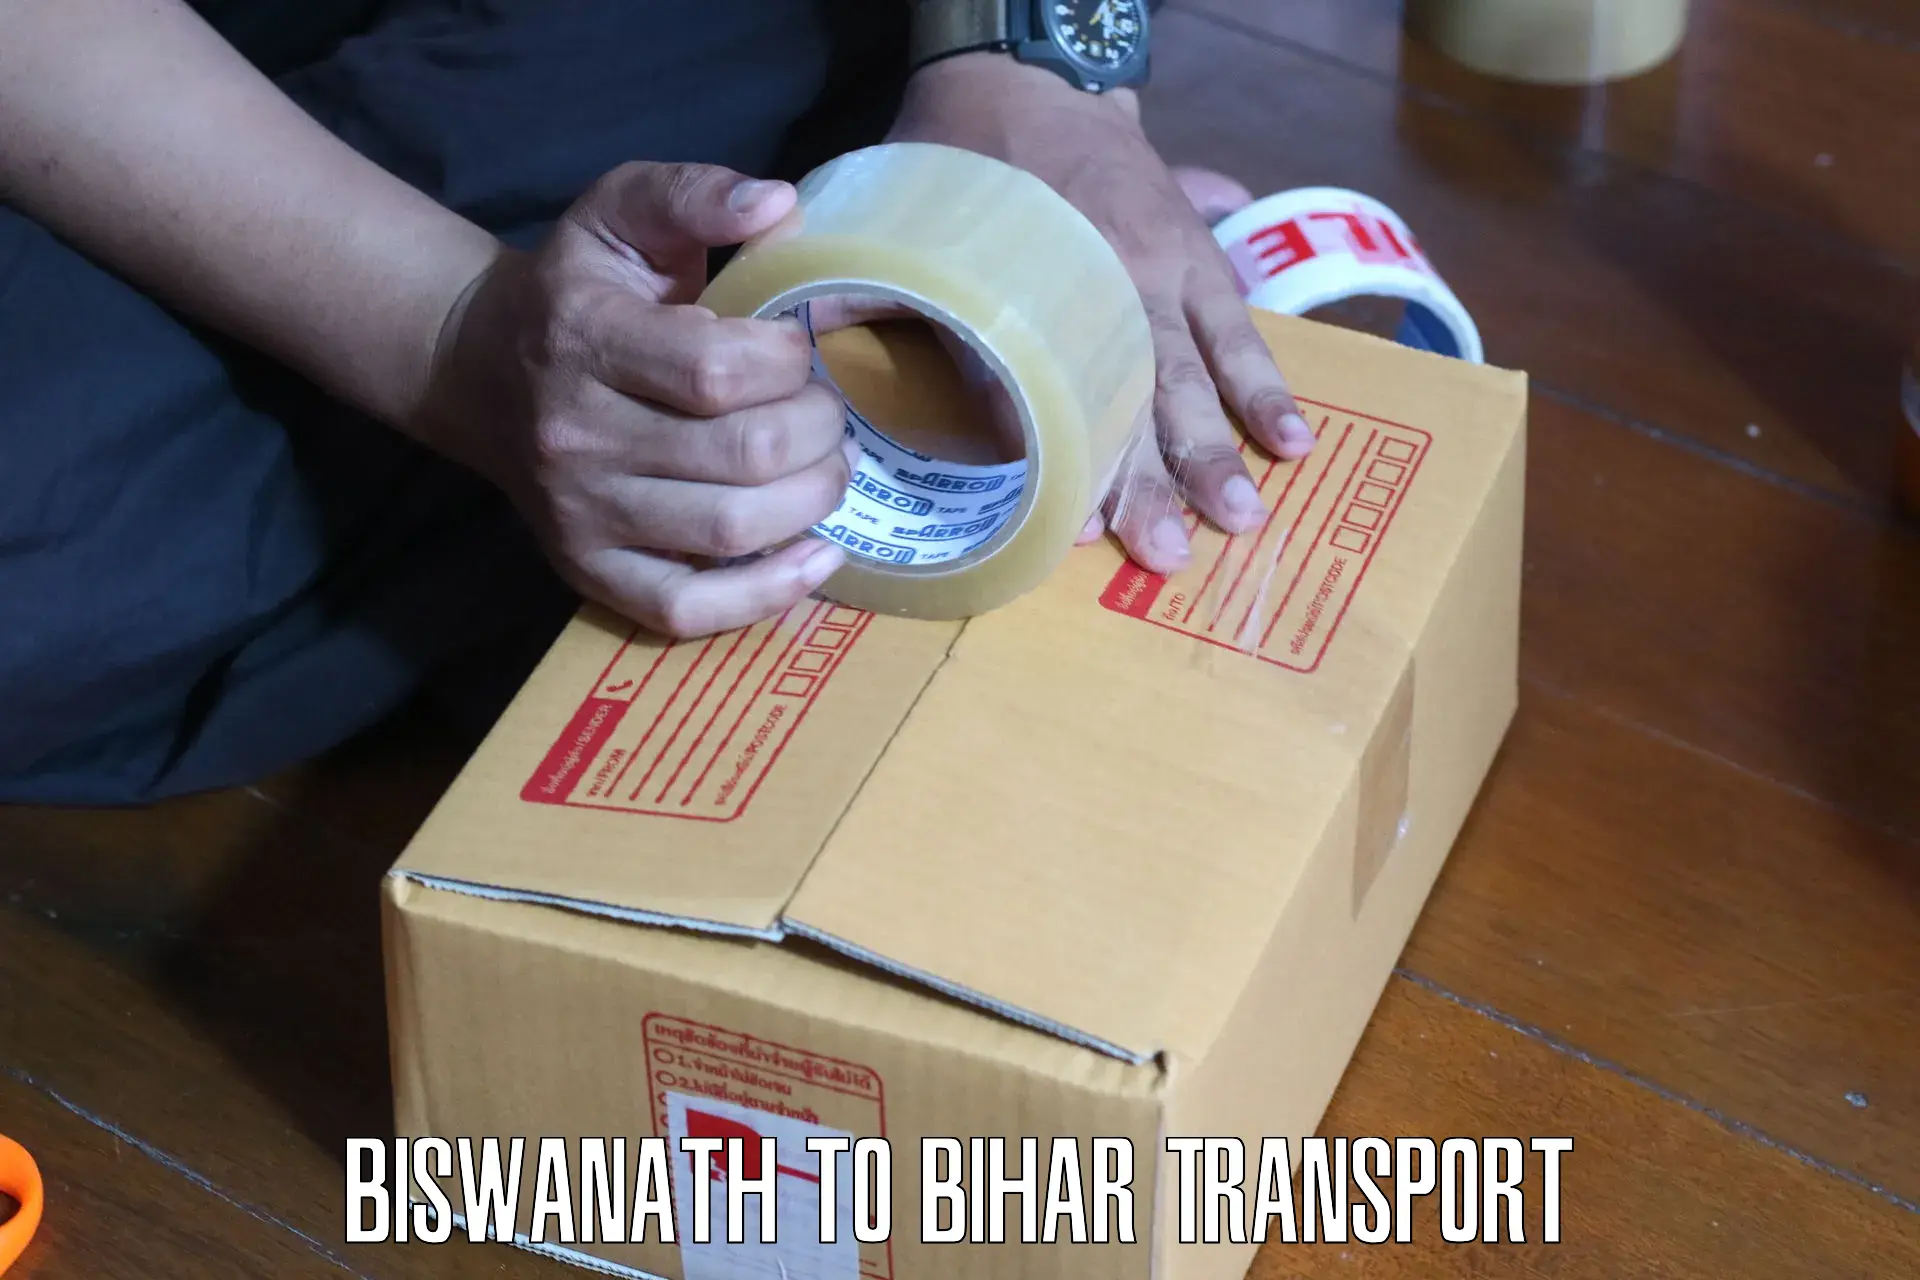 Truck transport companies in India Biswanath to Jaynagar